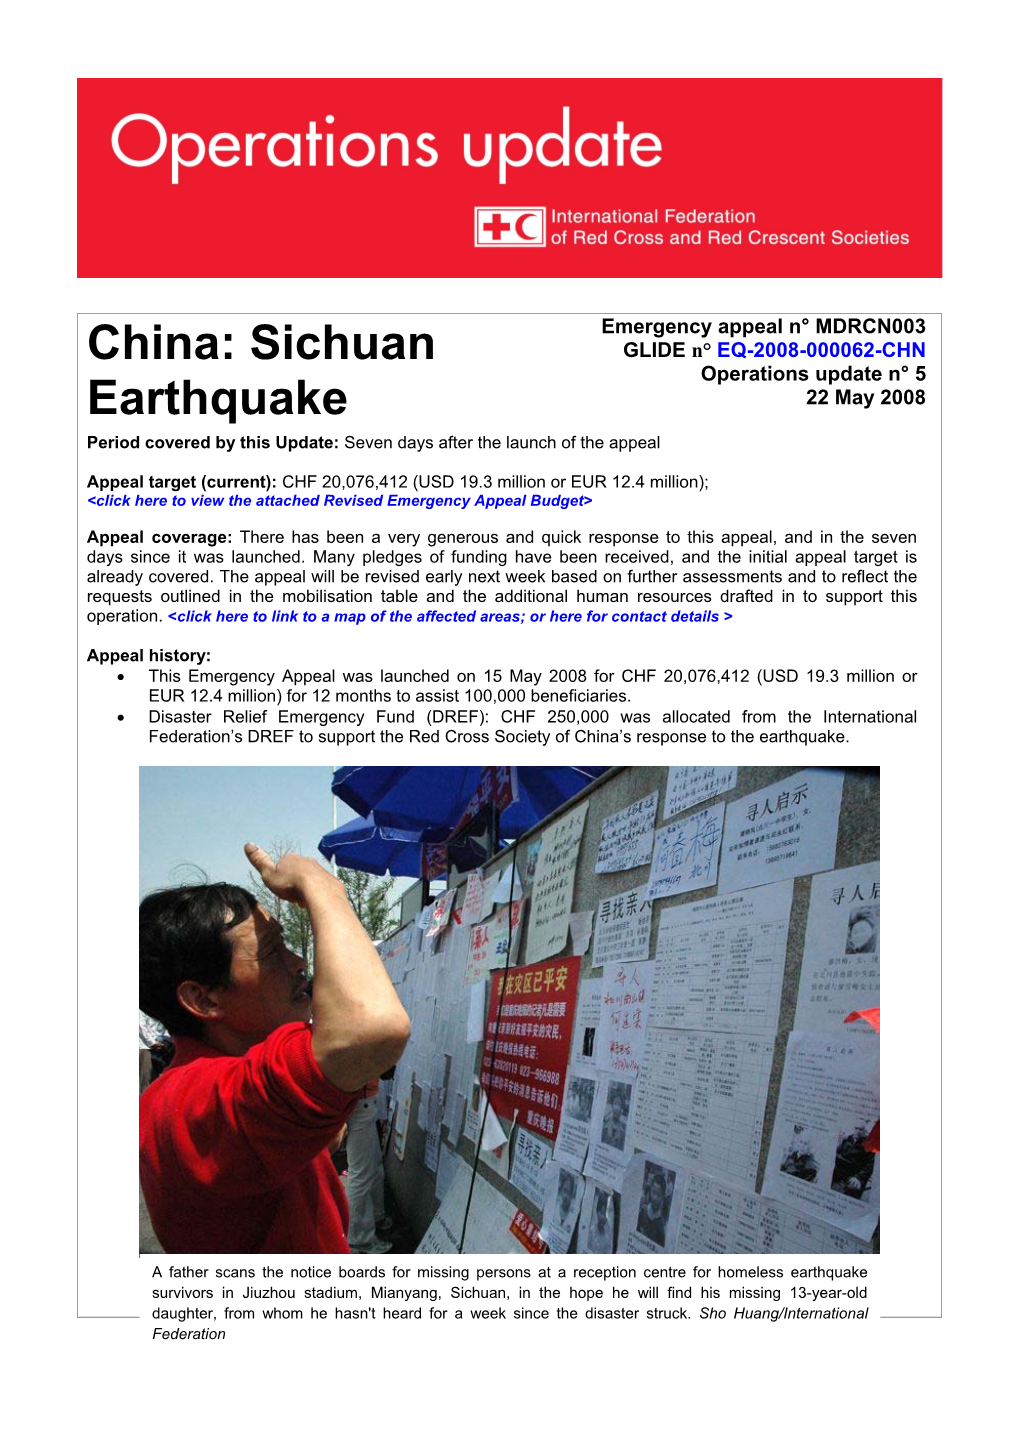 Sichuan Earthquake Relief Efforts